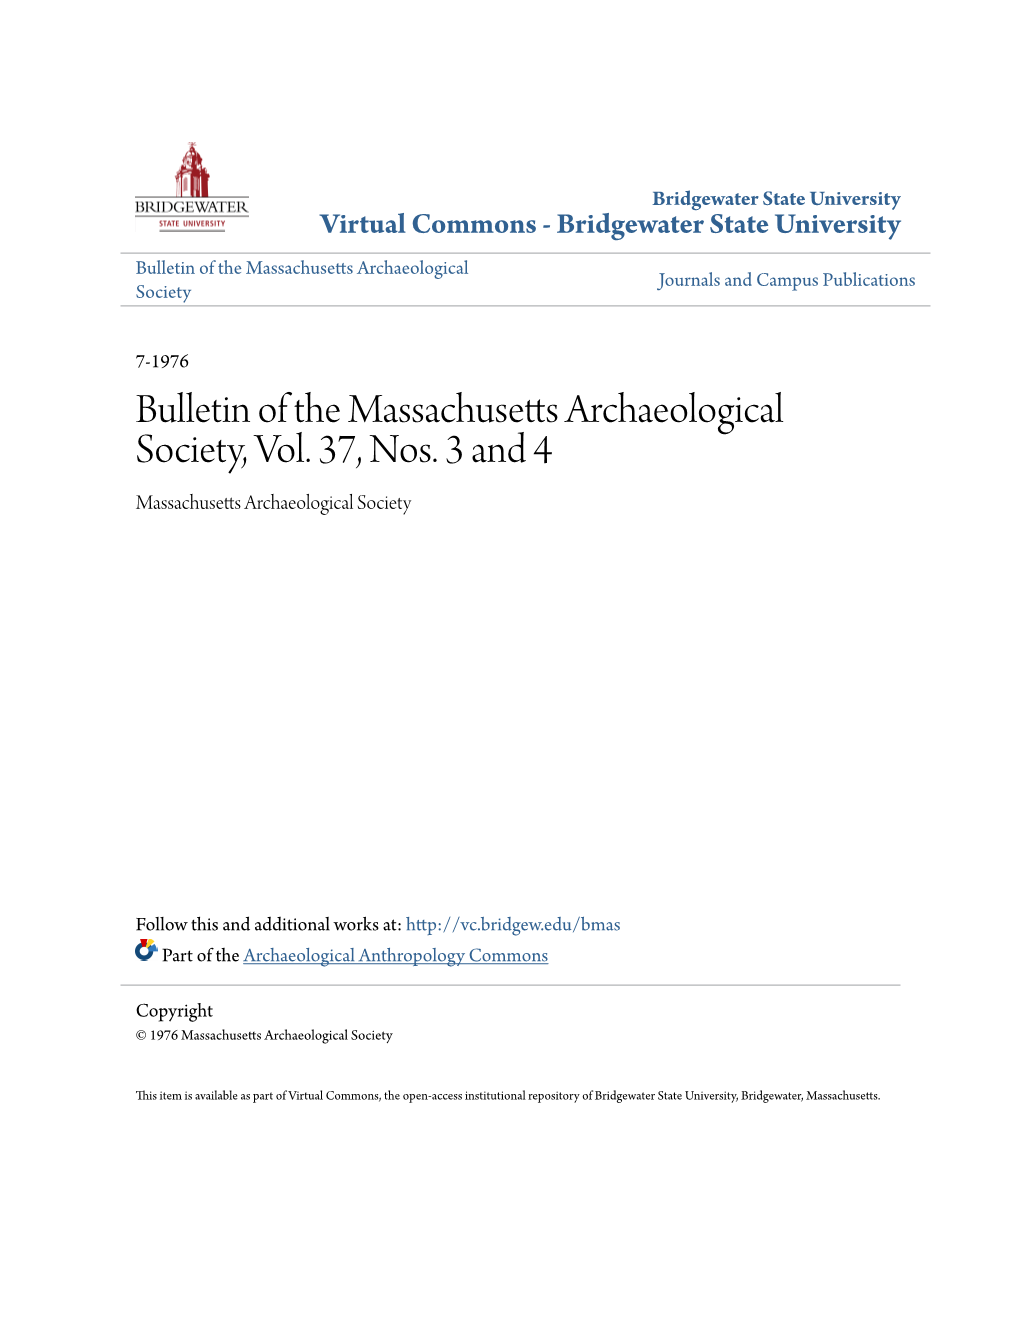 Bulletin of the Massachusetts Archaeological Society, Vol. 37, Nos